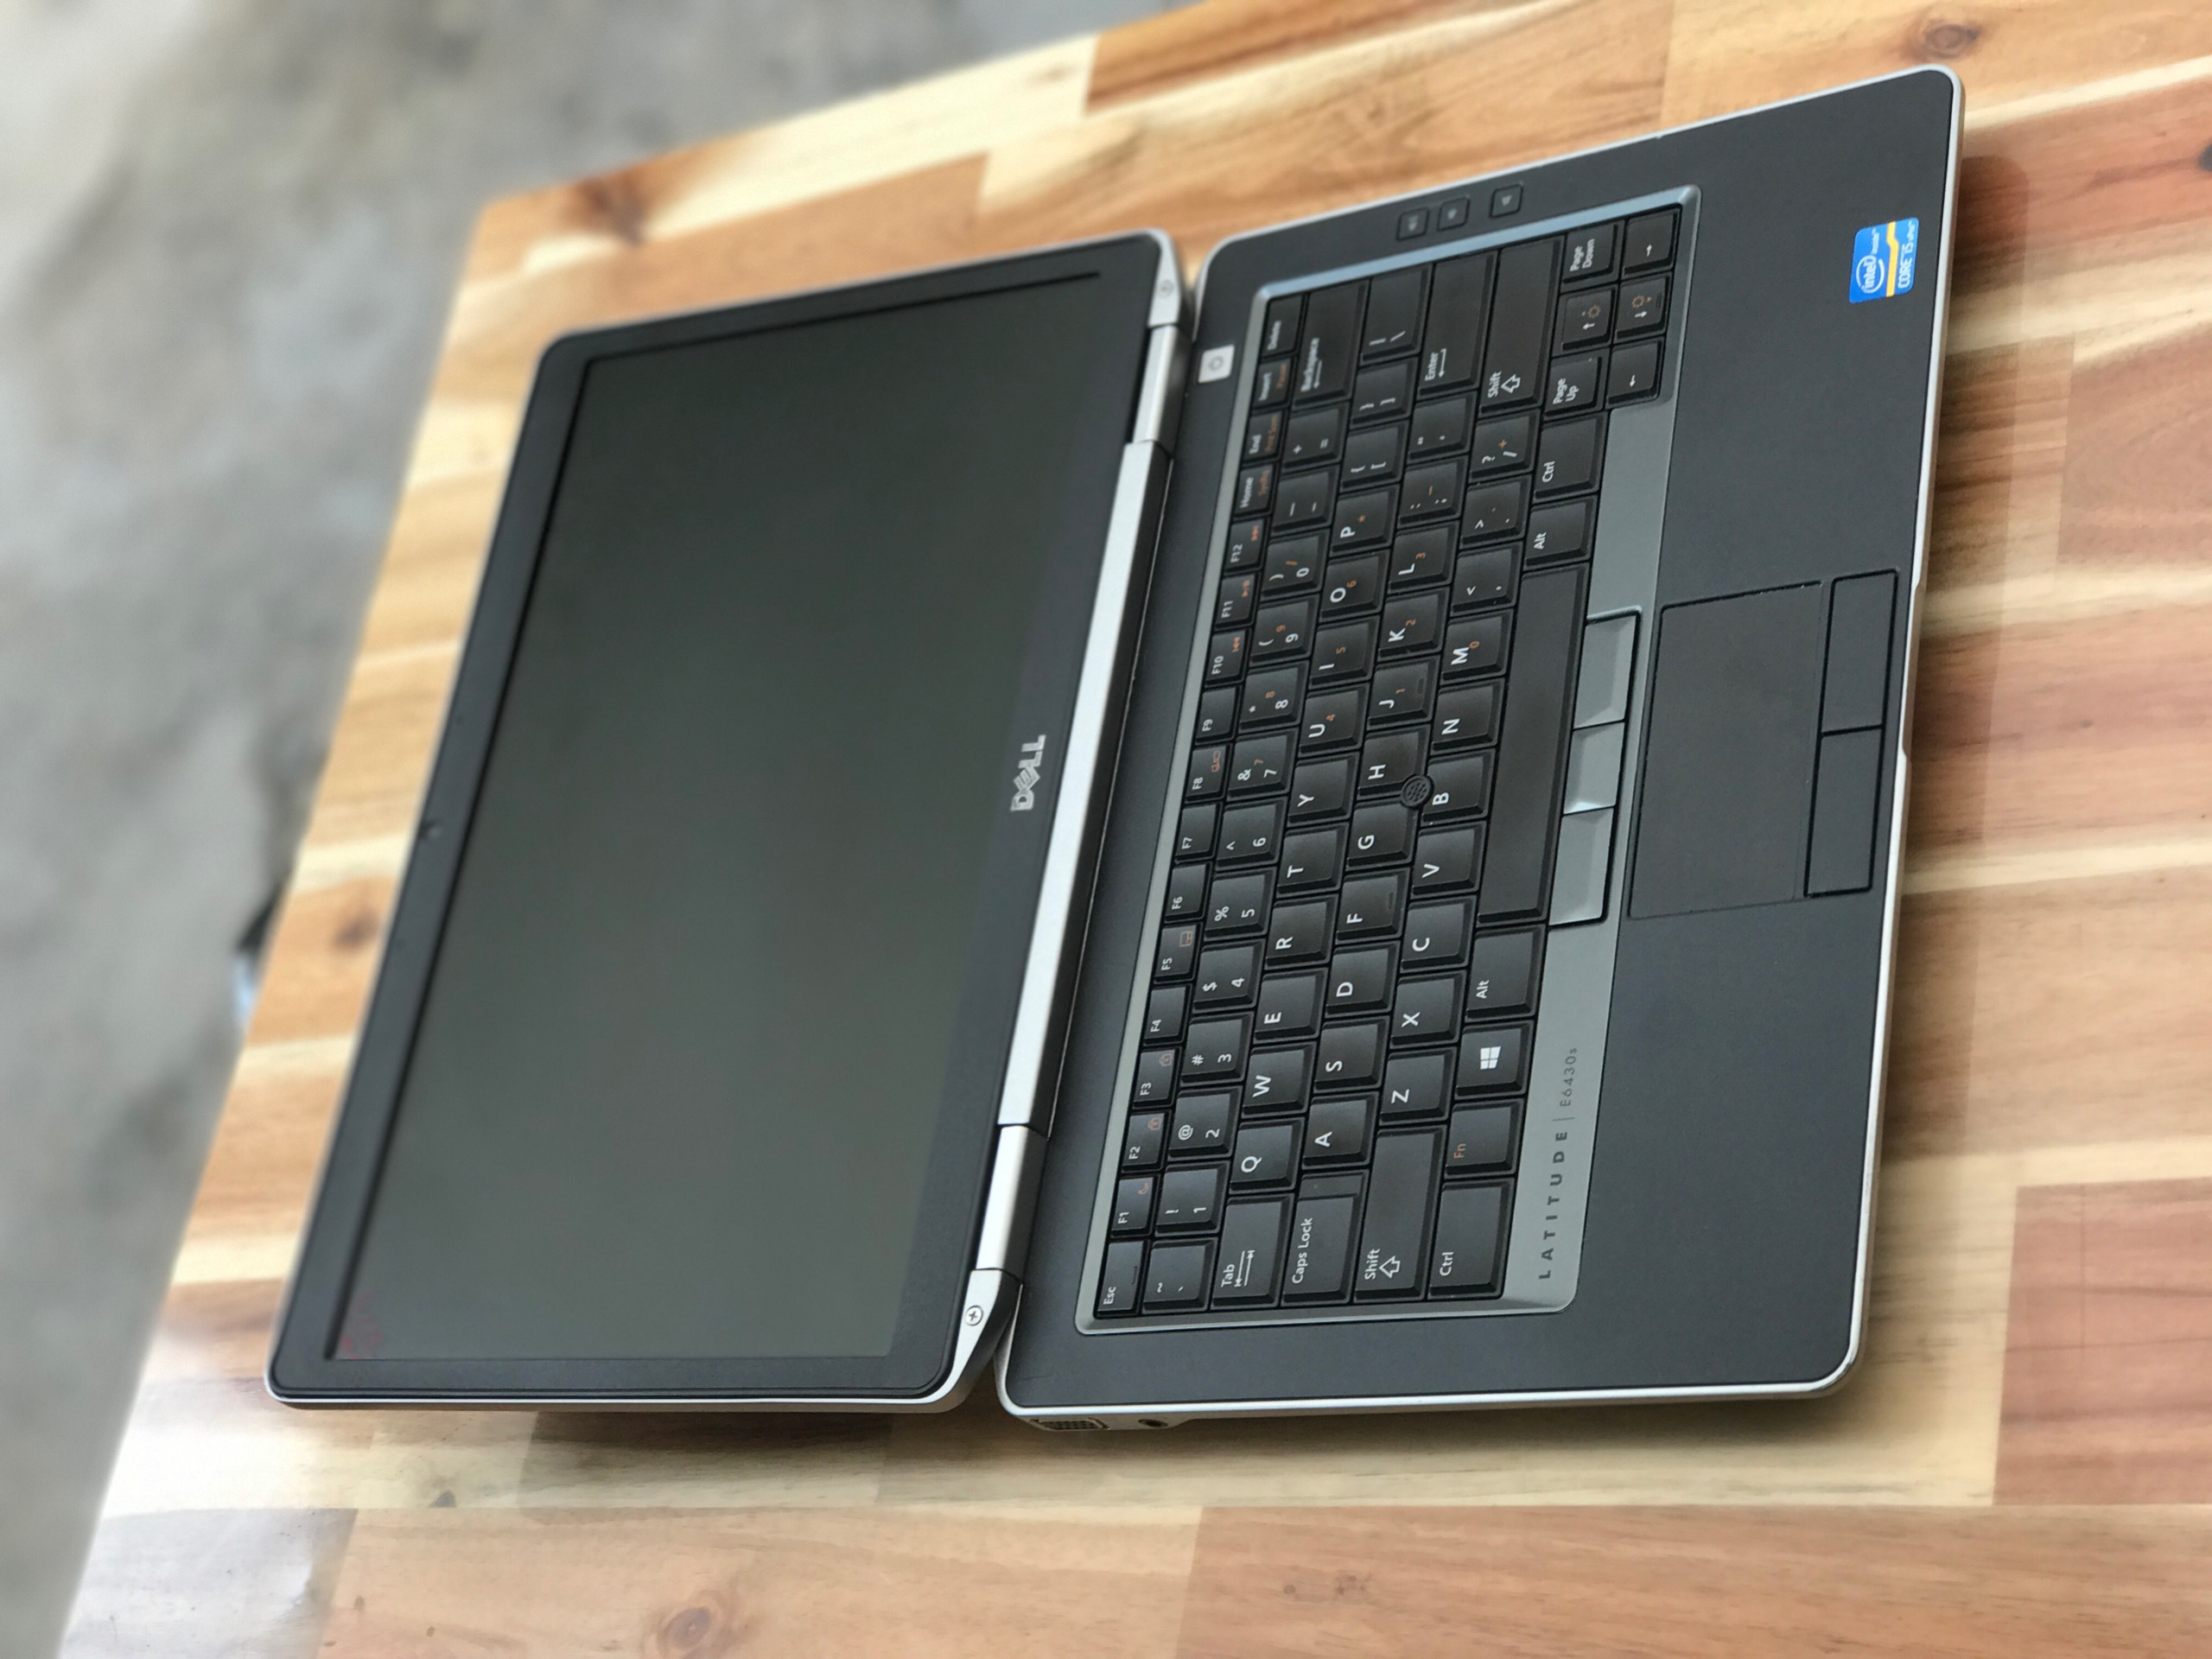 Laptop Dell Latitude E6420, i5 2520M 4G 320G Đẹp zin 100% Giá rẻ4